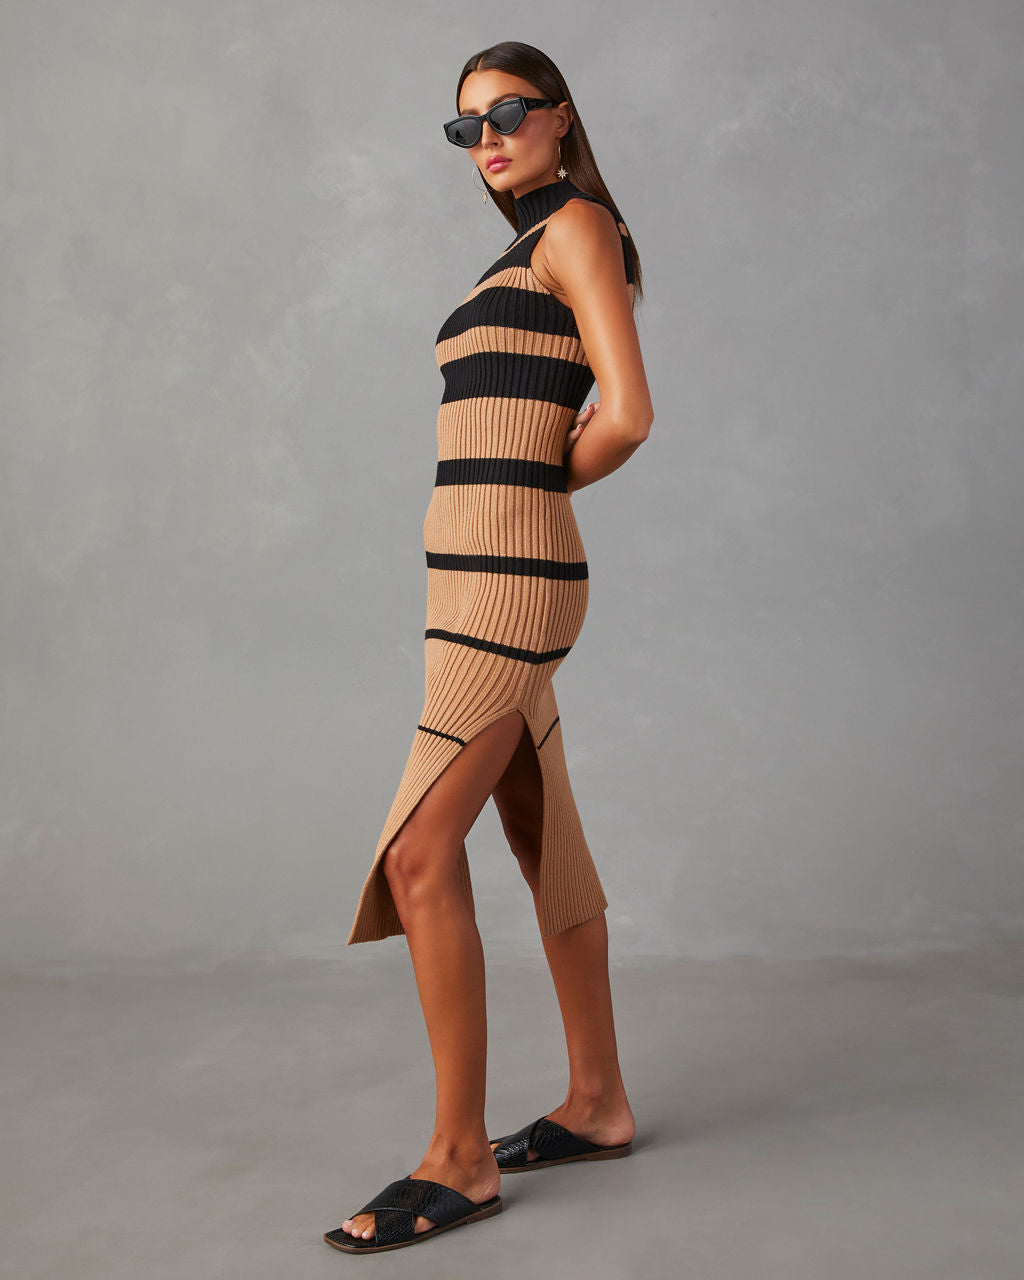 Striped Asymmetric Midi Dress - Navy and Ivory Vertical Stripe | Boden US